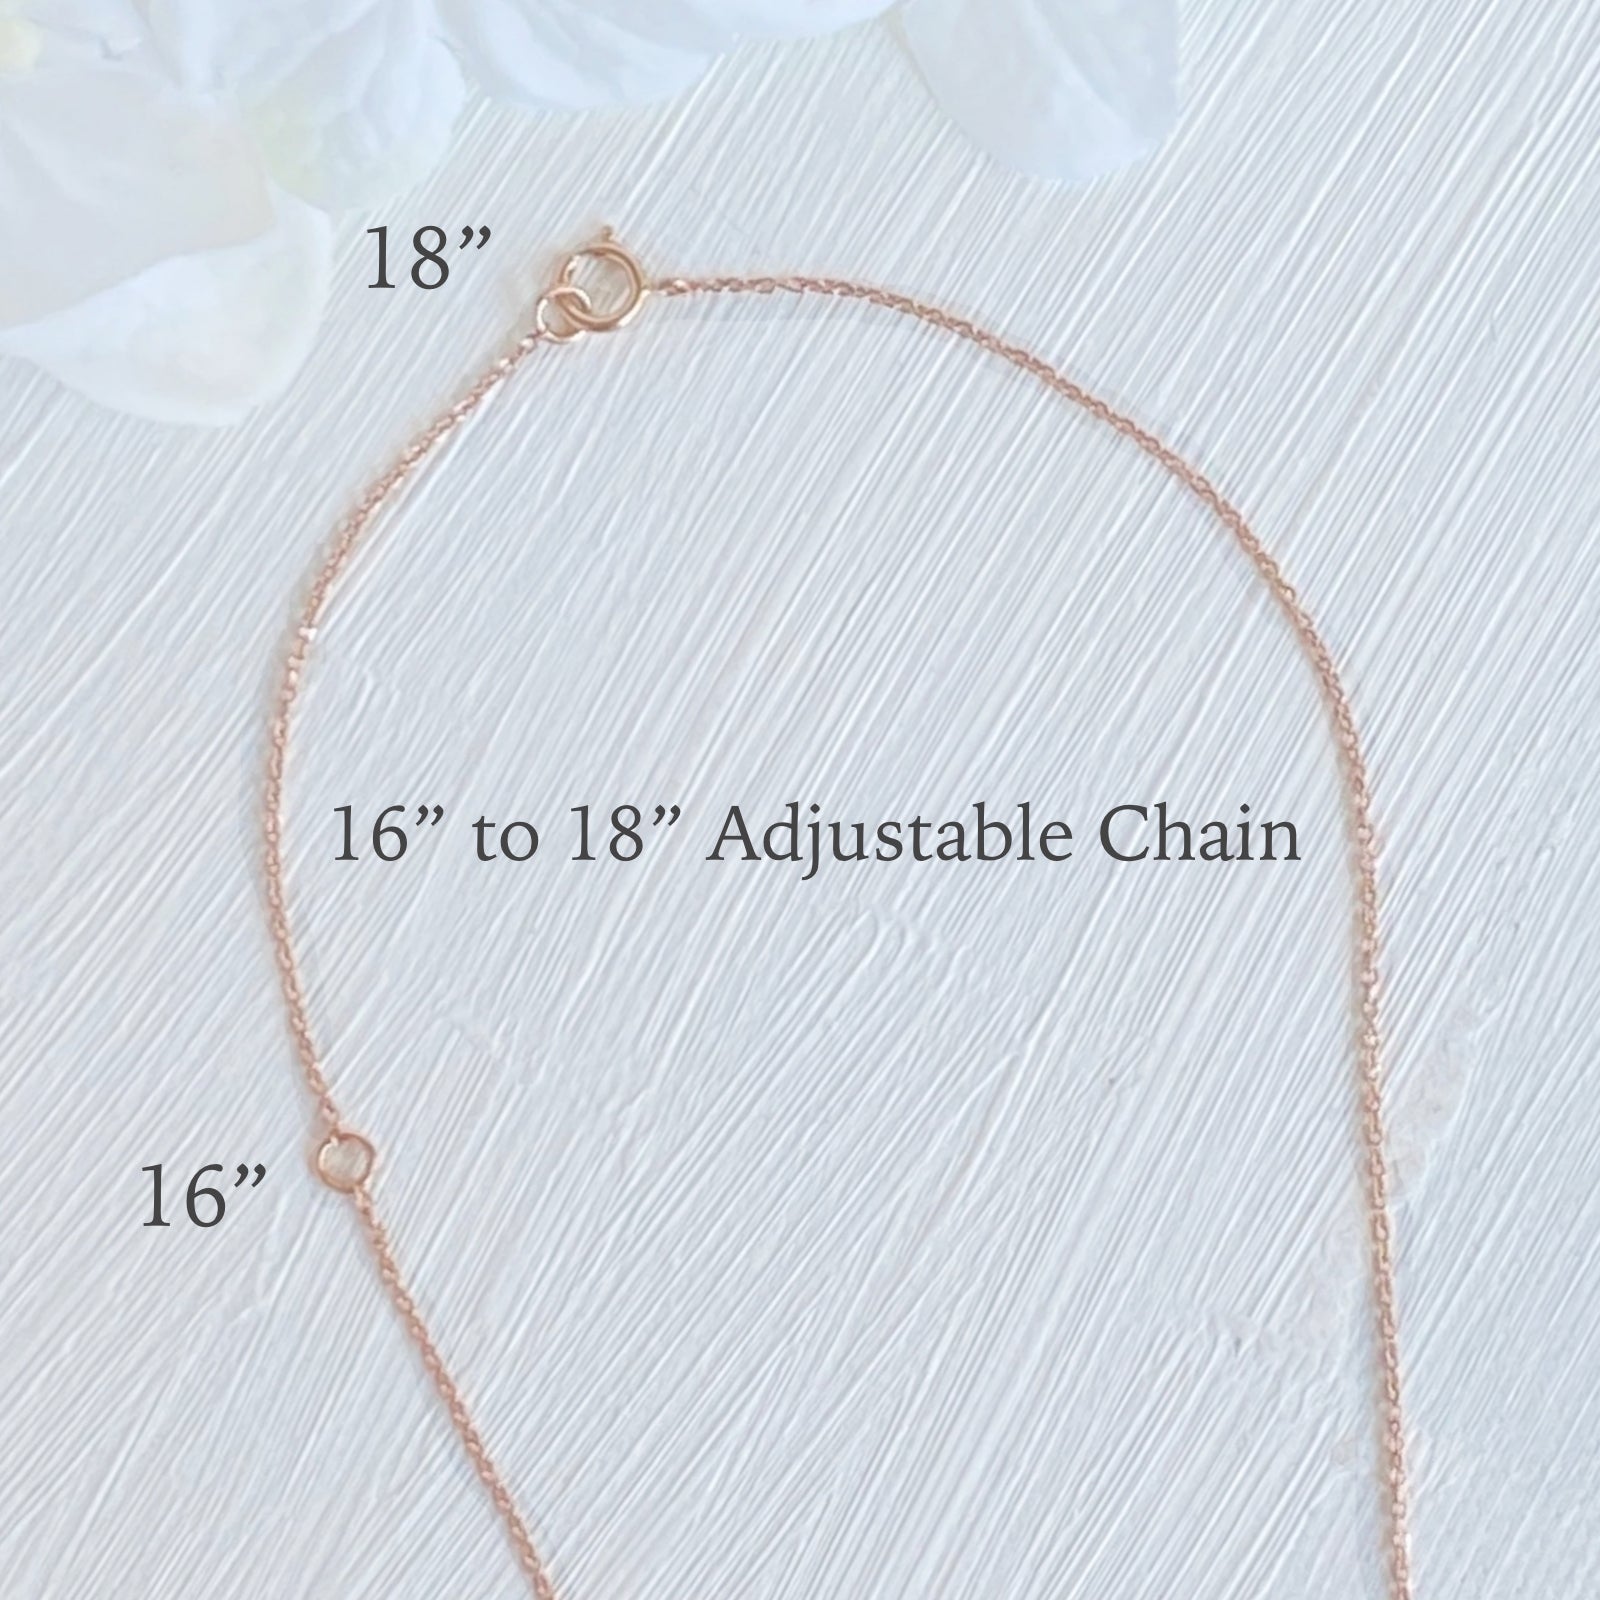 Chevron Black Diamond Pendant Rose Gold V Shaped Diamond Necklace 14K White Gold - Made to Order